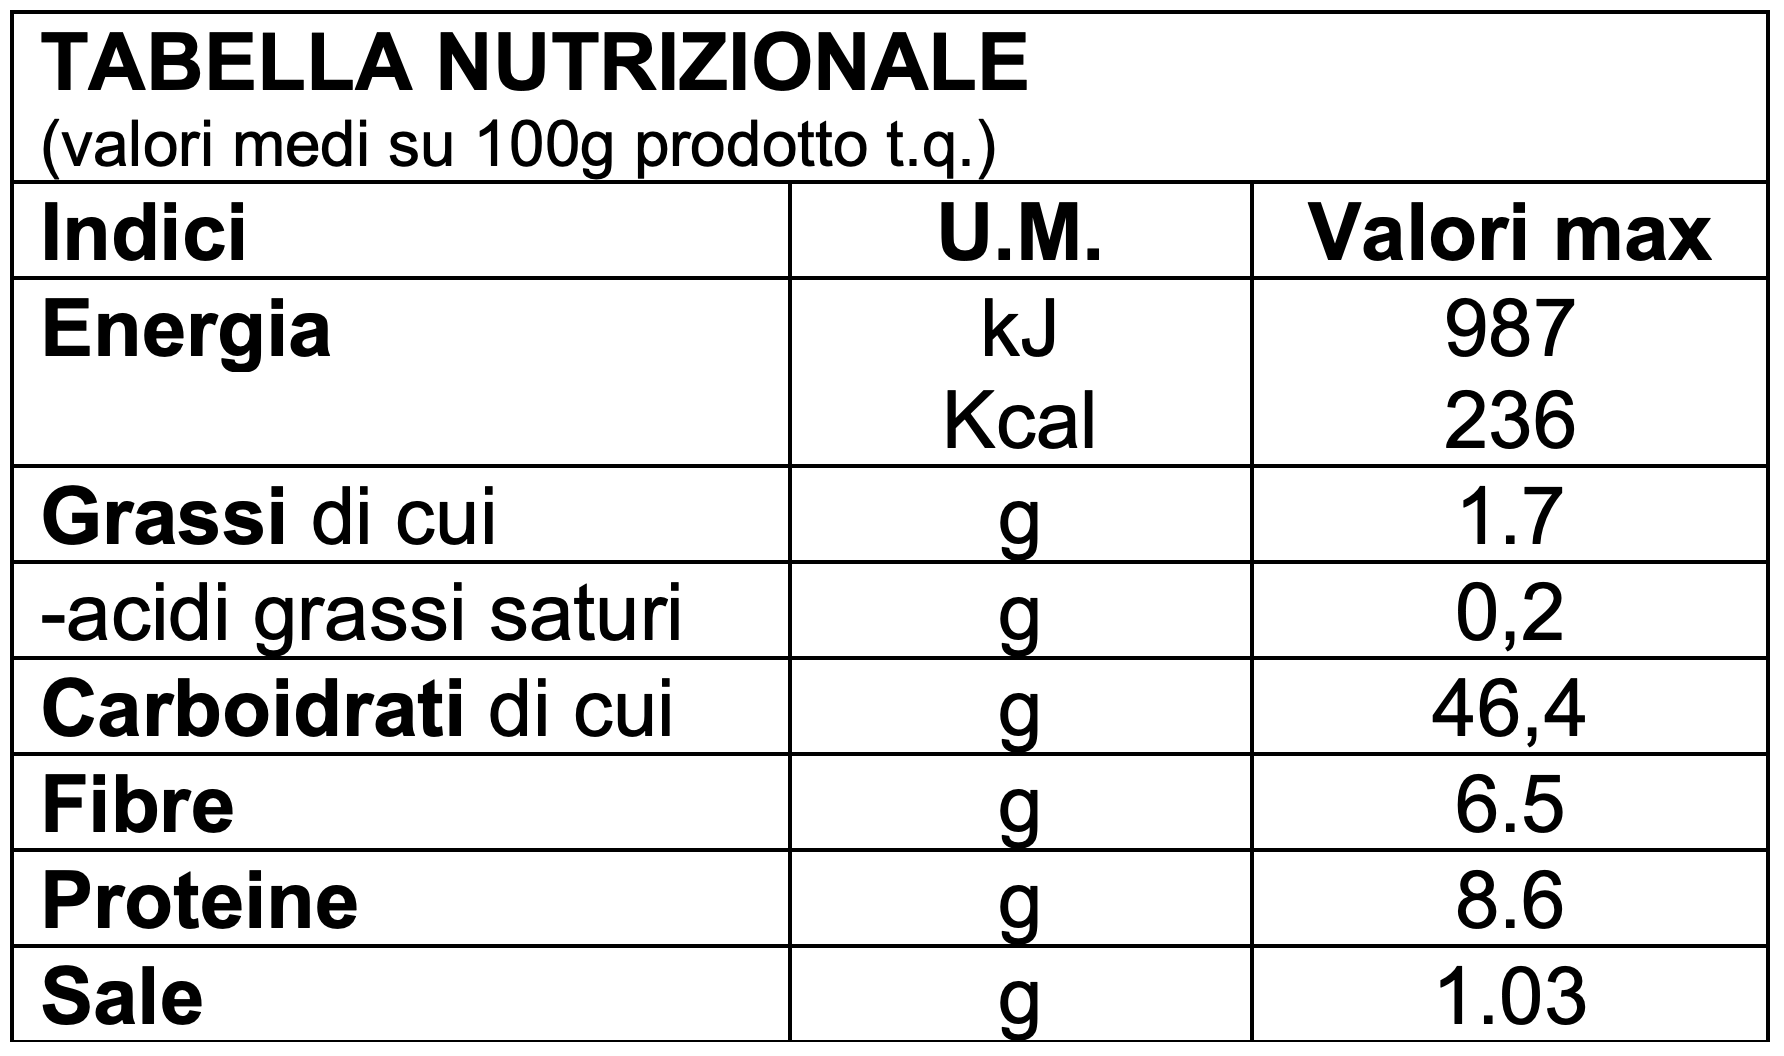 https://www.panem.it/wp-content/uploads/2019/12/tabella-nutrizionale-buoni-giorni-integrale.png